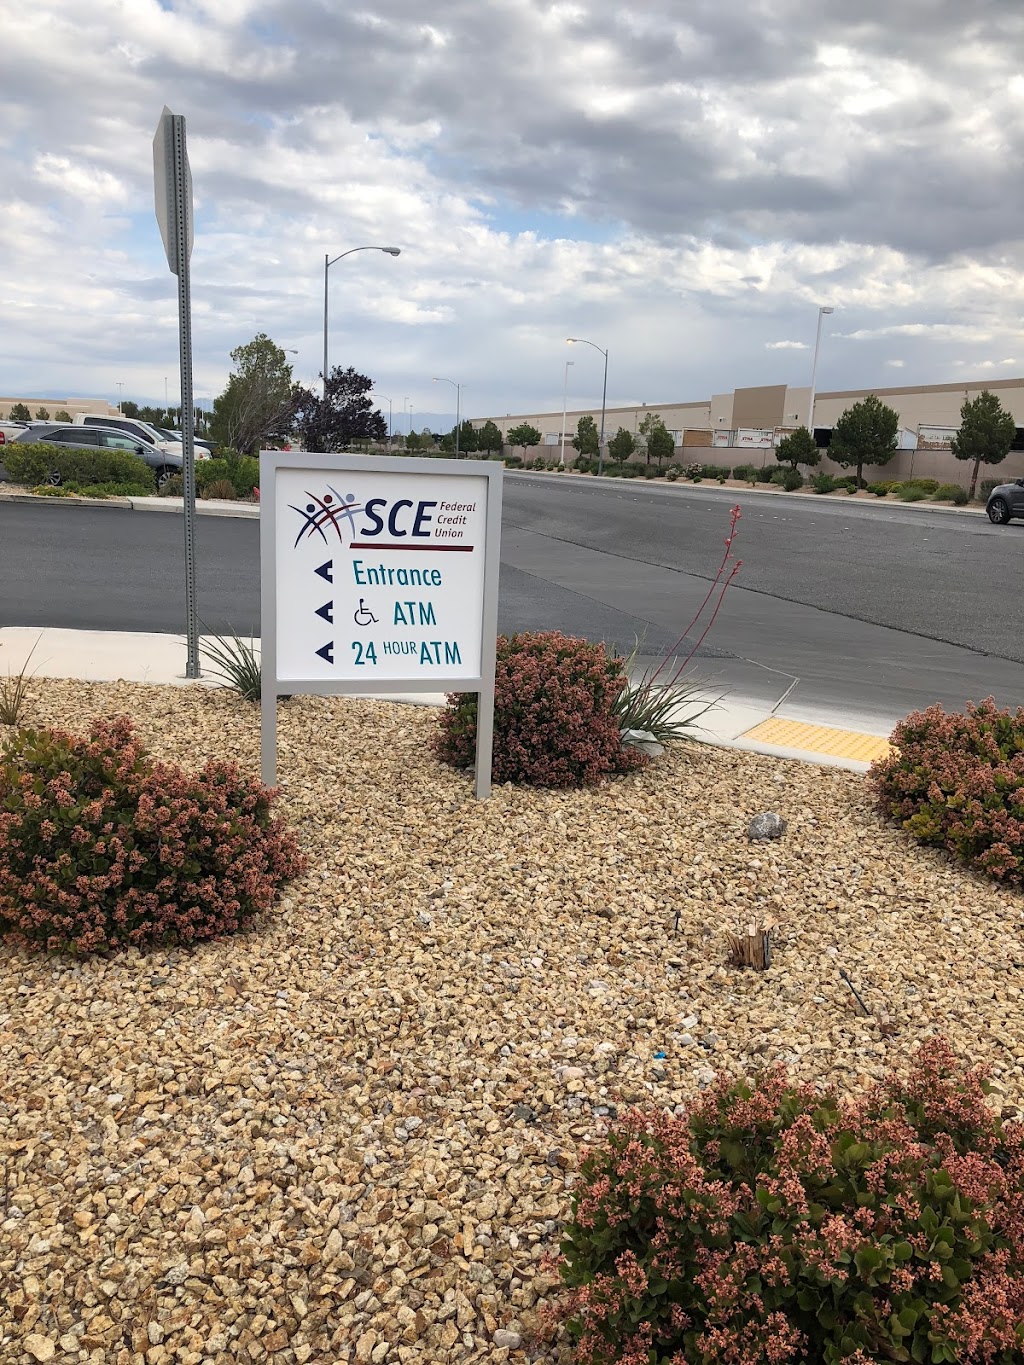 SCE Credit Union - Southwest Branch | 7155 S Lindell Rd, Las Vegas, NV 89118 | Phone: (800) 866-6474